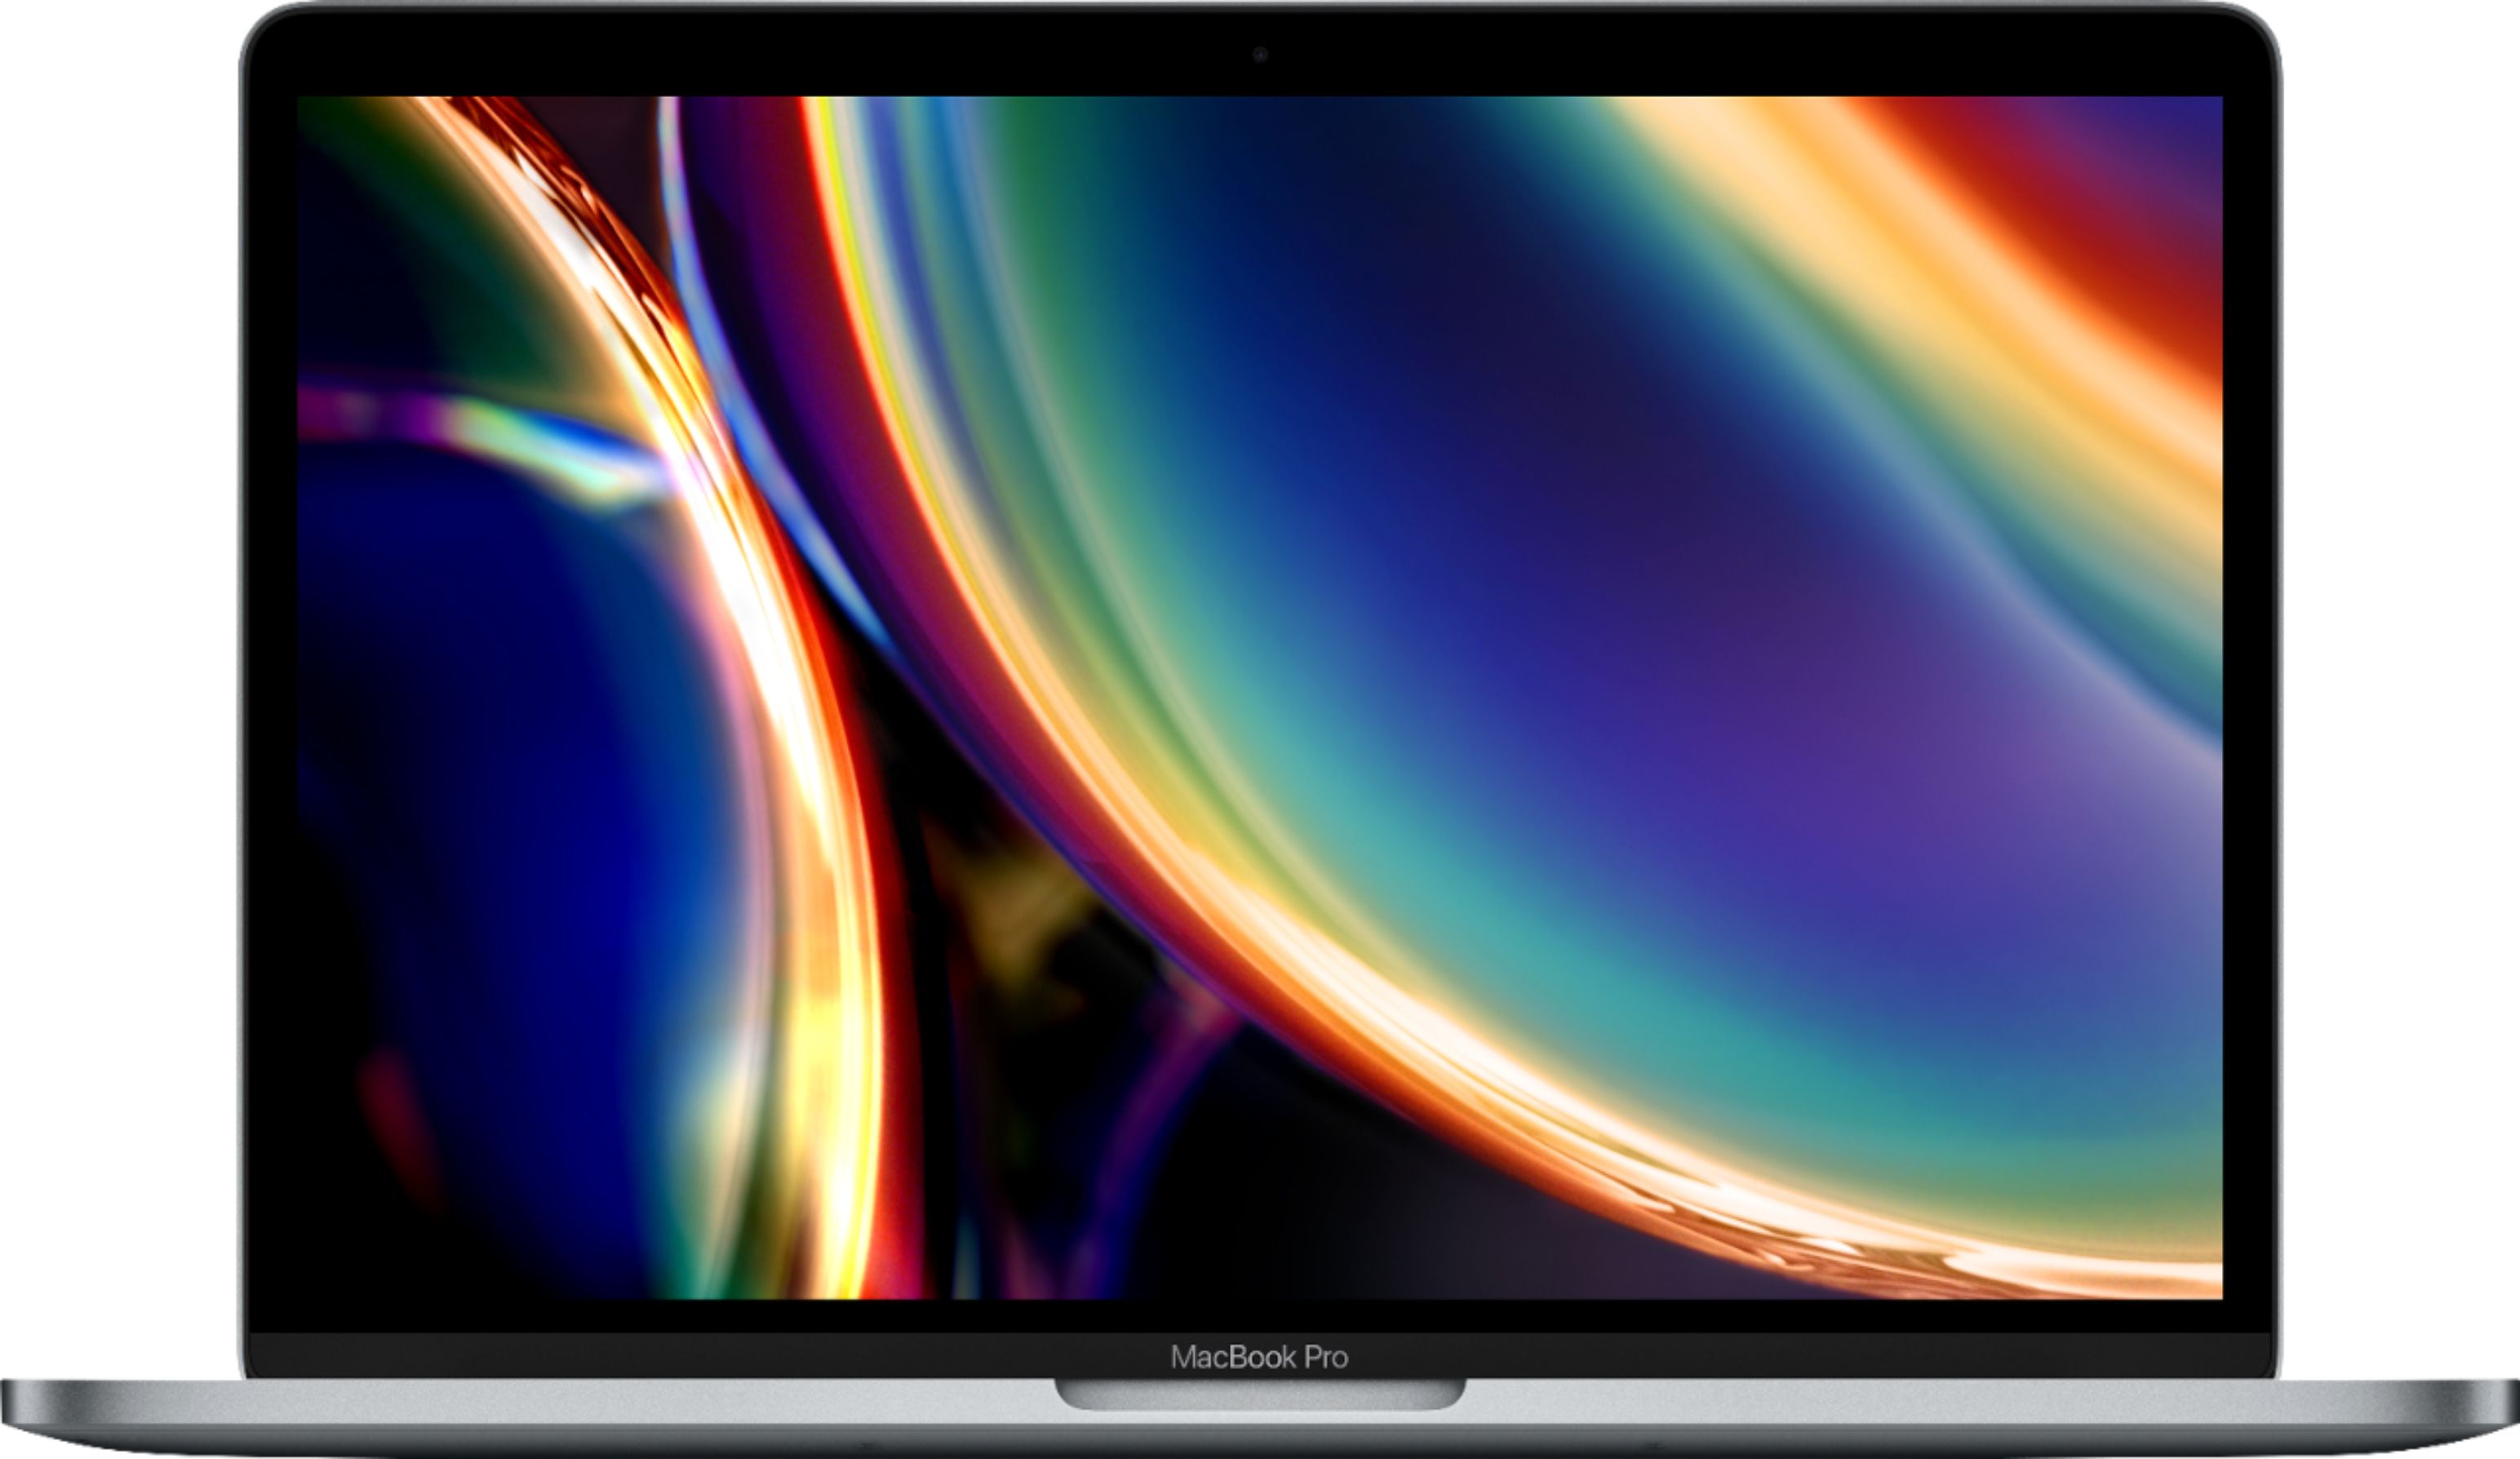 Macbook pro 13 inch retina display best buy periscope girls